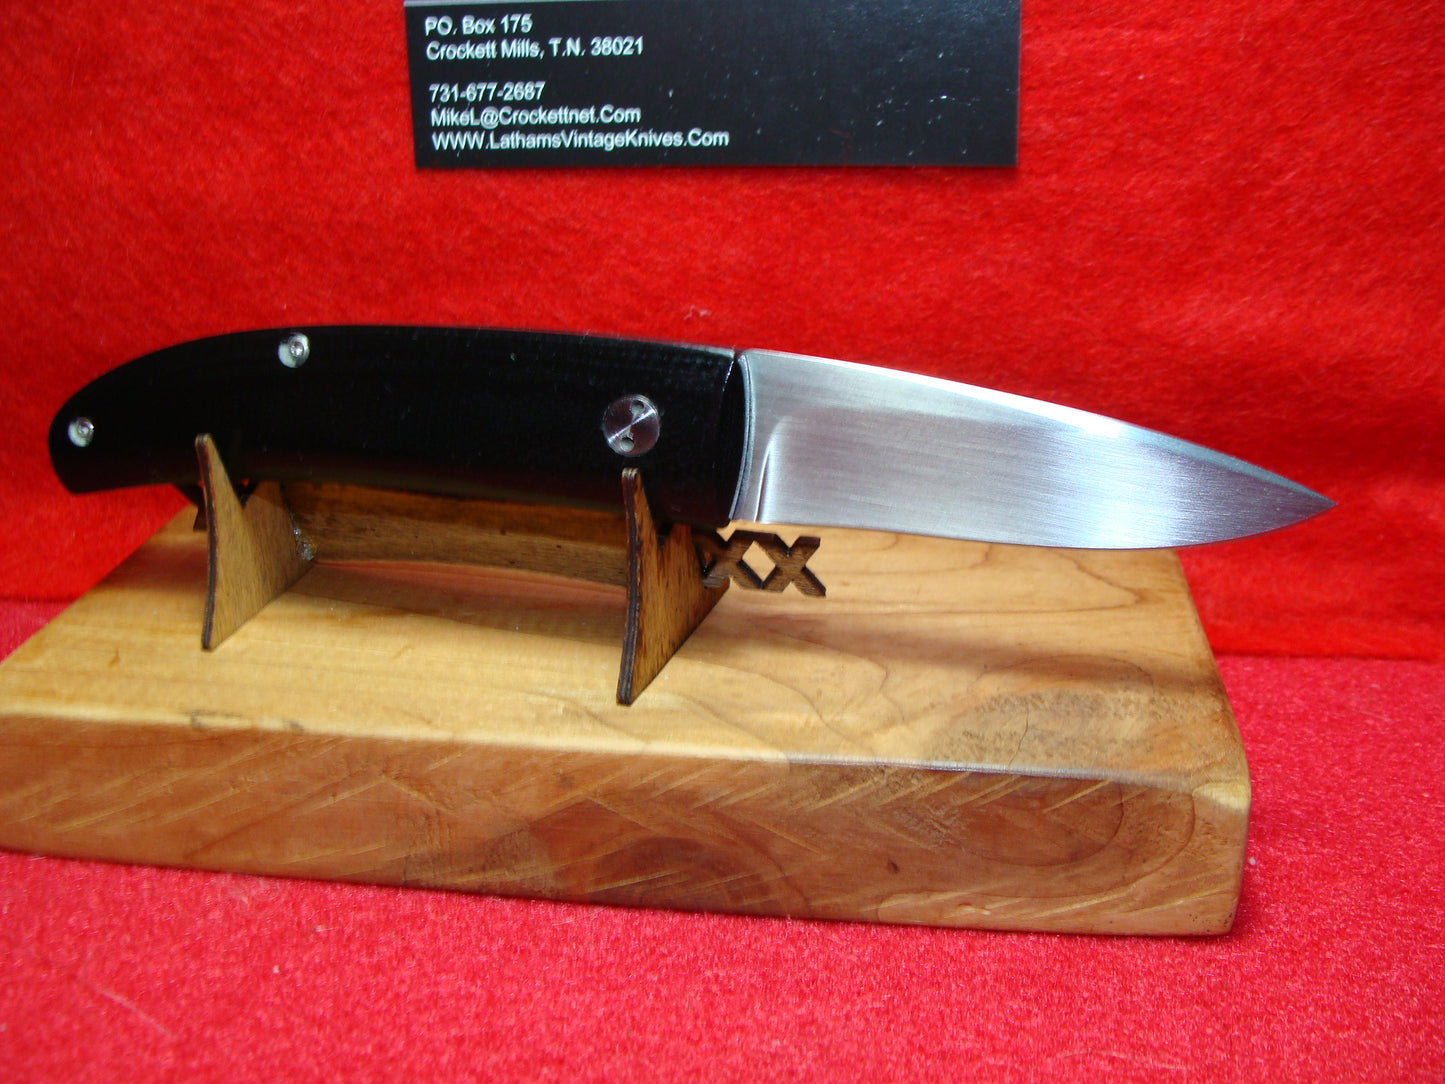 AKA-6 CUSTOM 1985-95 SMALL CUSTOM AUTOMATIC KNIFE BLACK MICARTA HANDLES